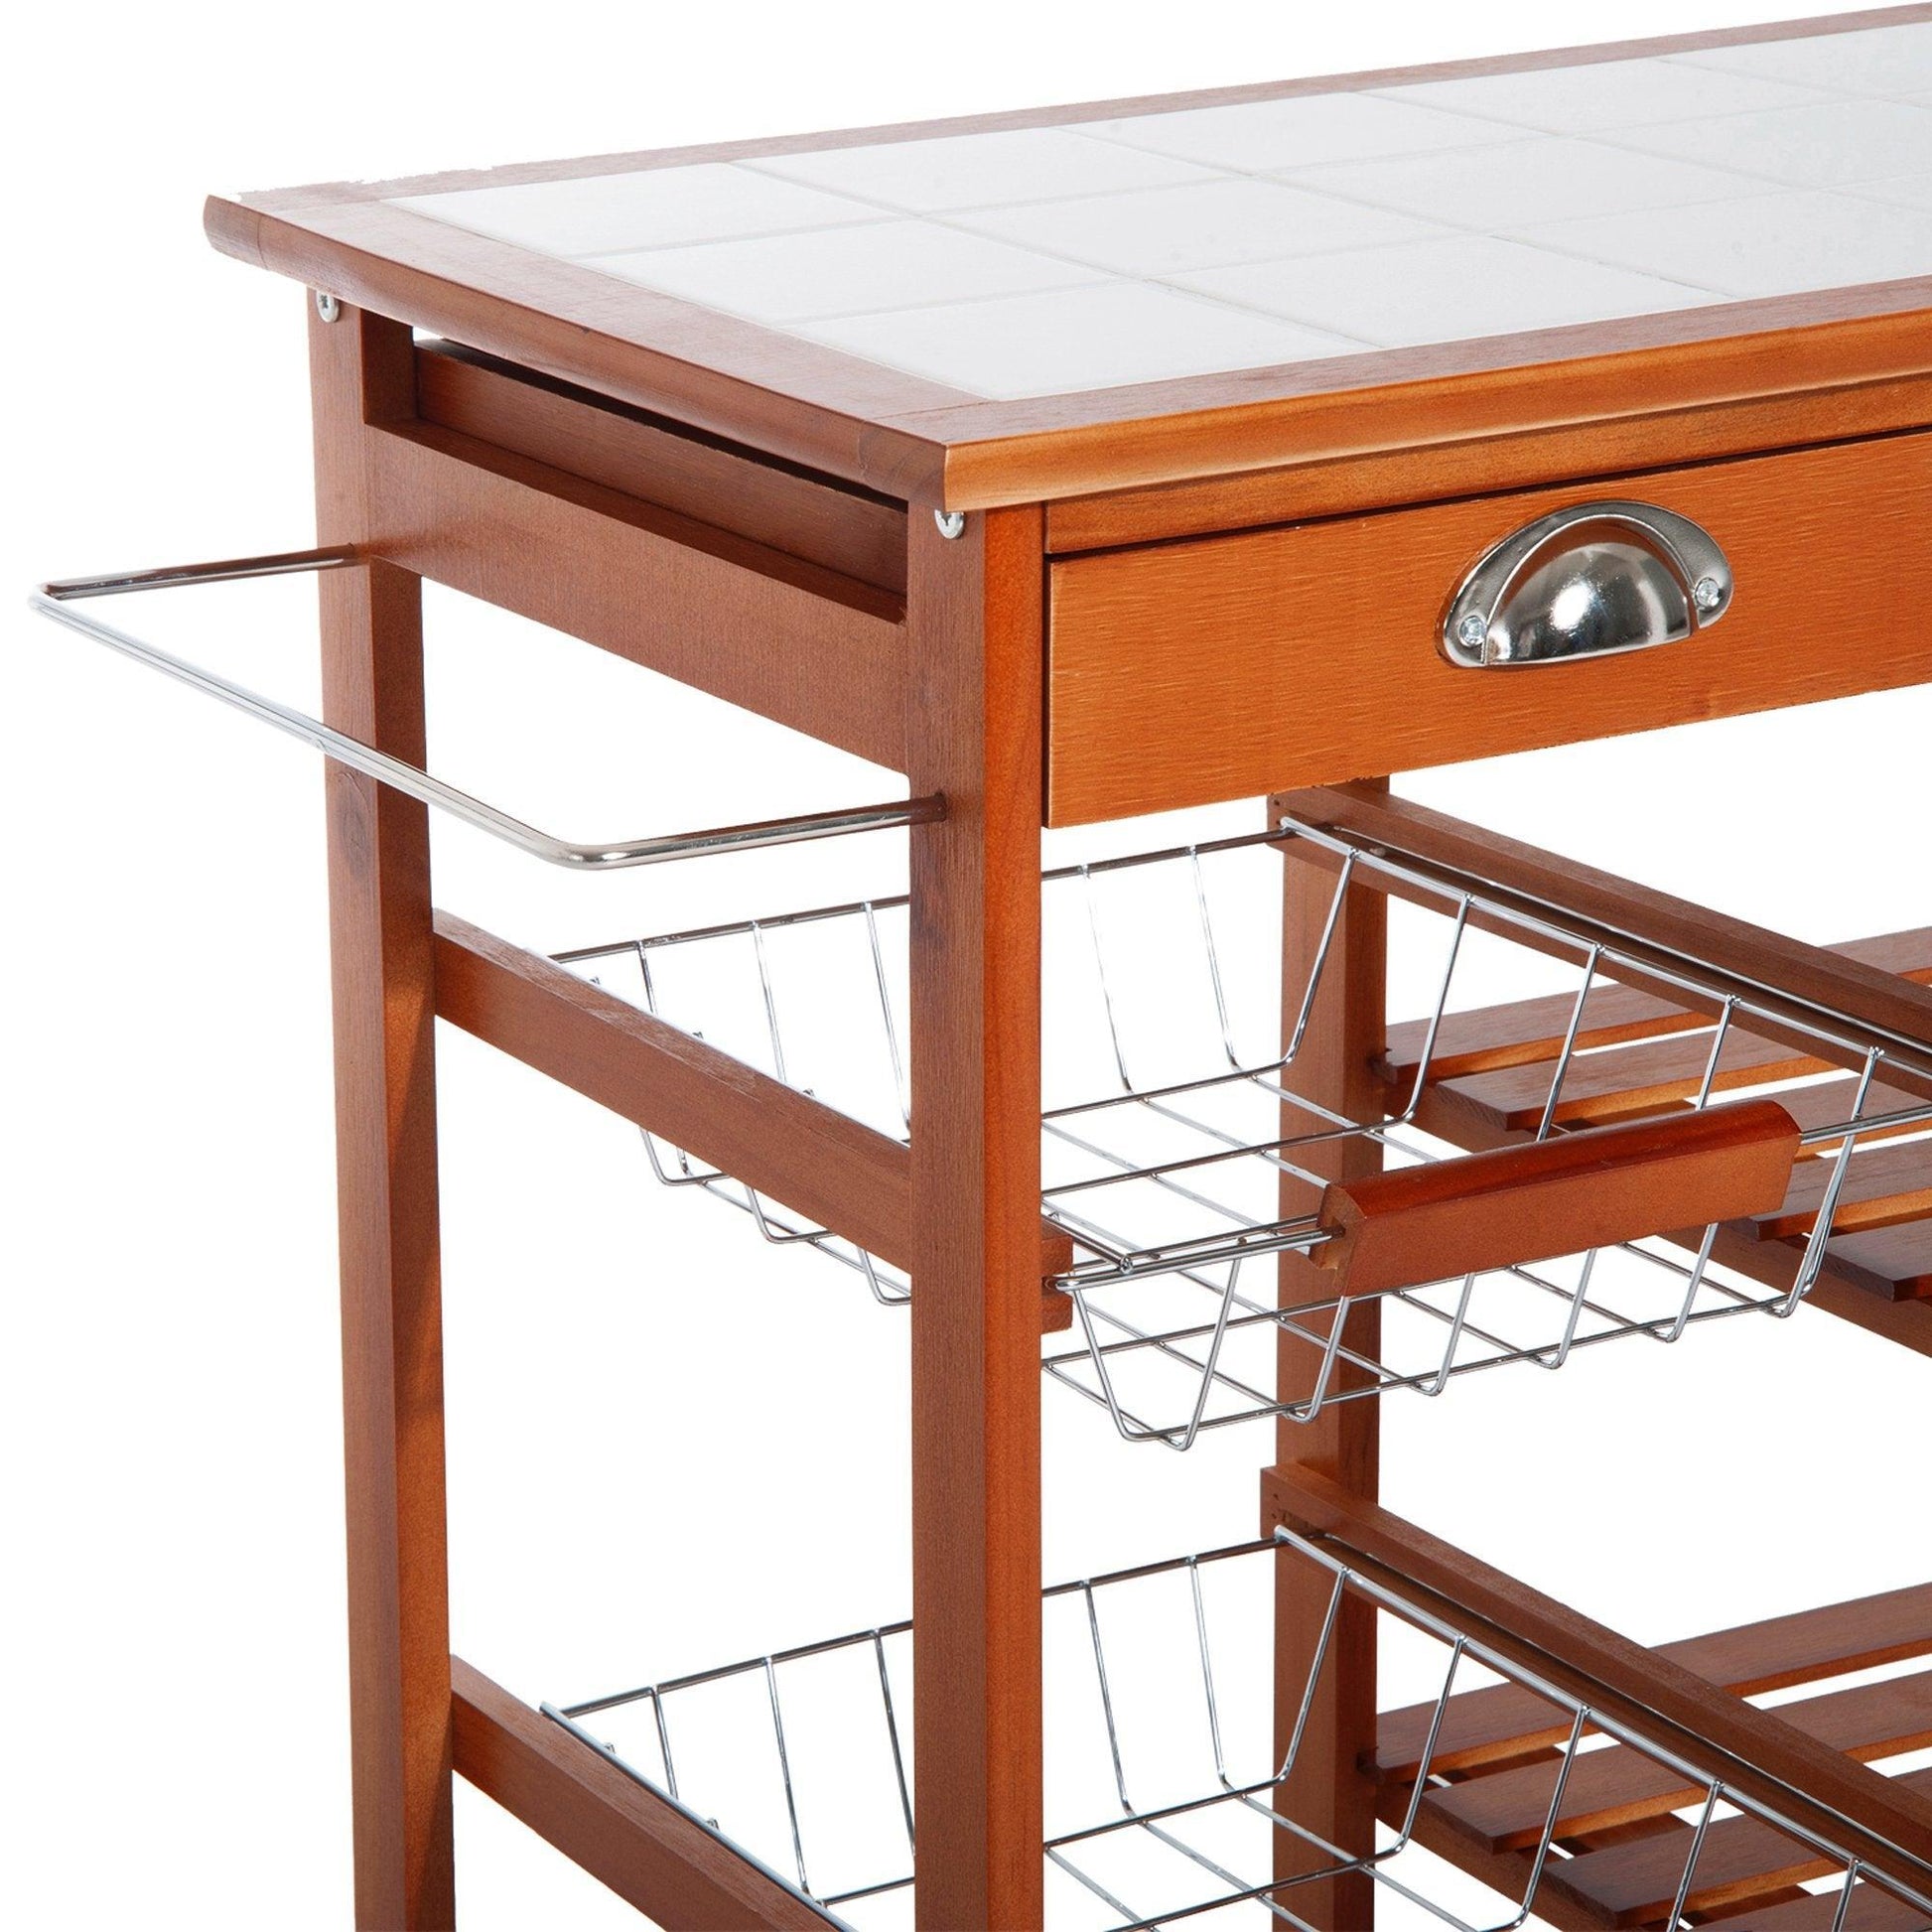 HOMCOM Wooden Kitchen Trolley Cart with Drawers - 3 Shelves - ALL4U RETAILER LTD